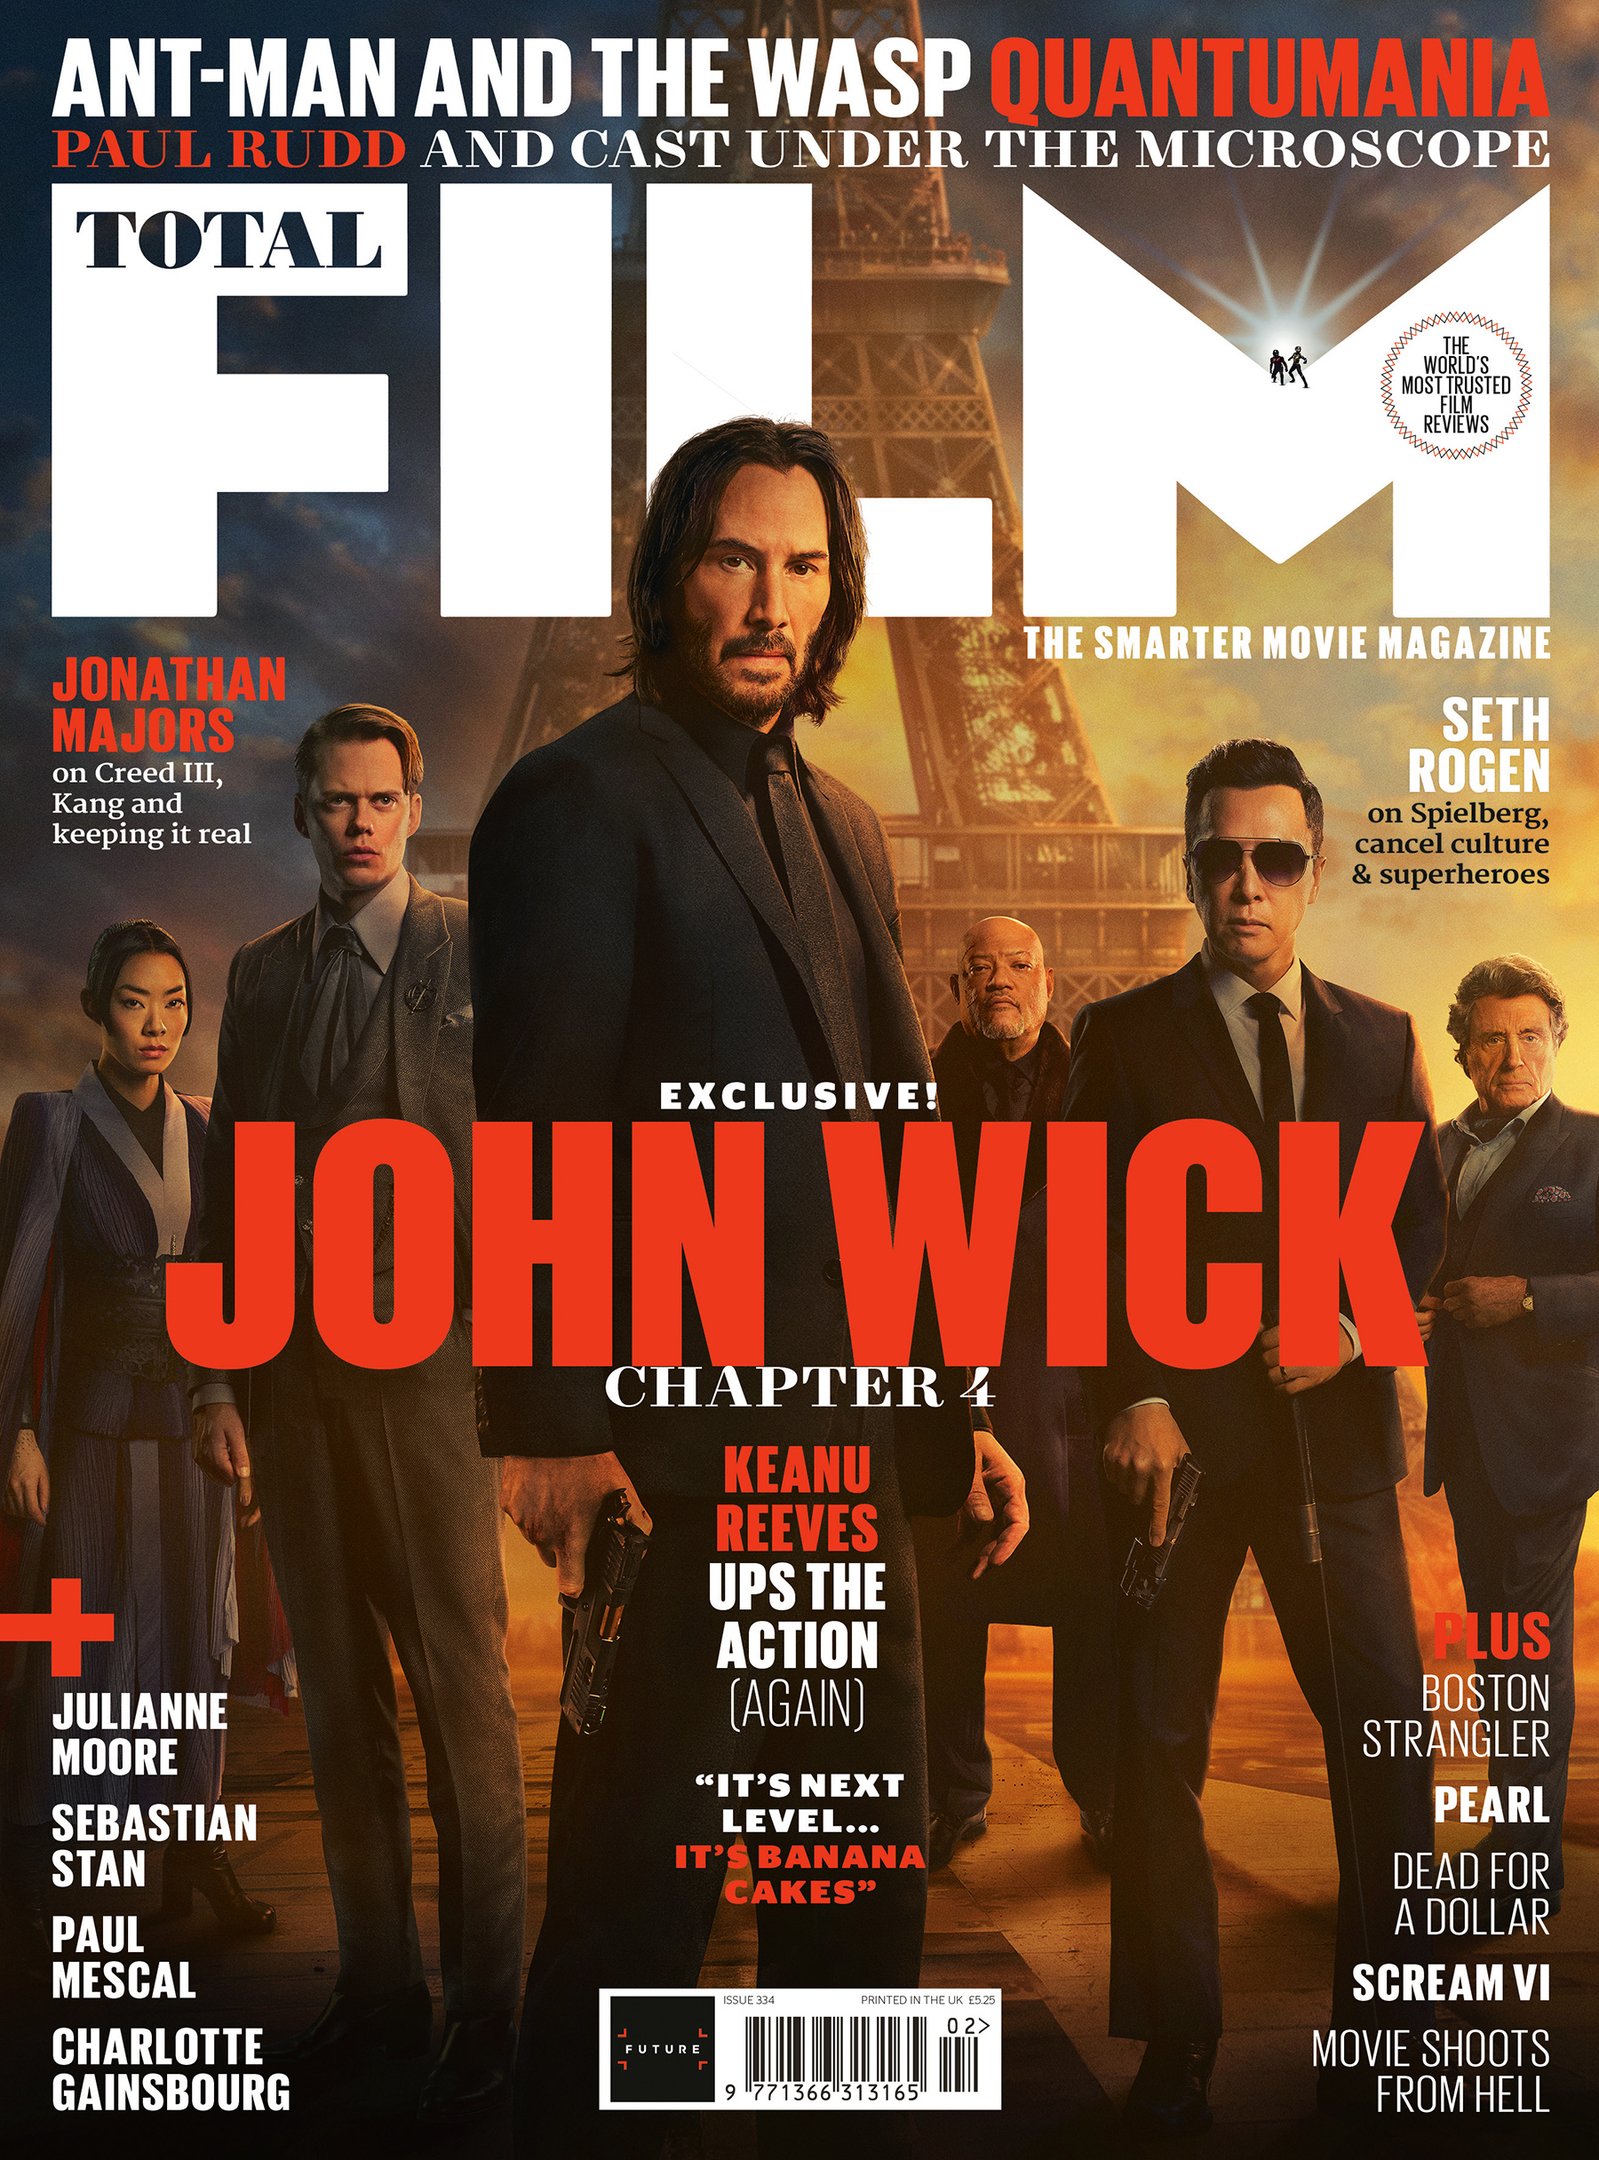 Keanu Reeves é destaque em nova foto de John Wick 4: Baba Yaga - NerdBunker